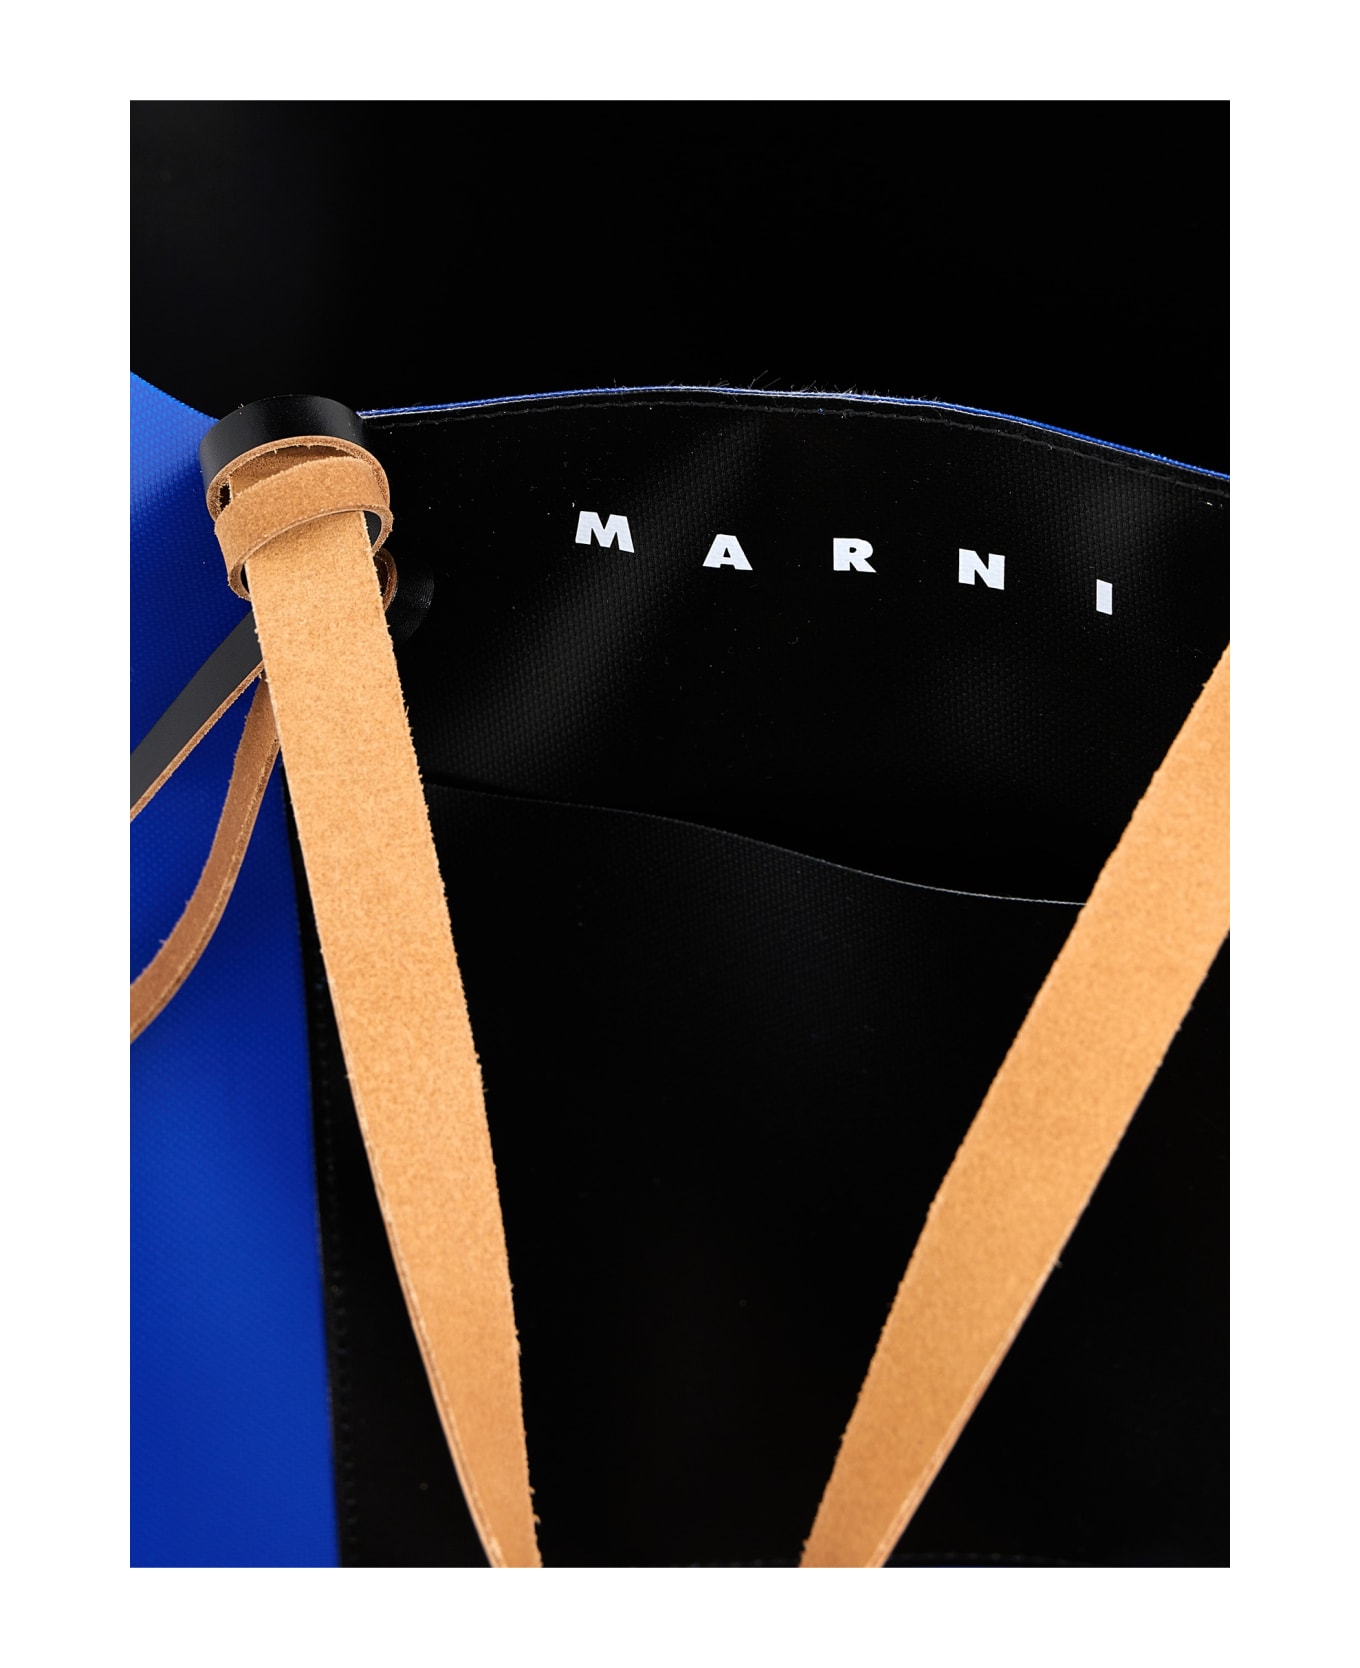 Marni 'tribeca' Shopping Bag - Multicolor